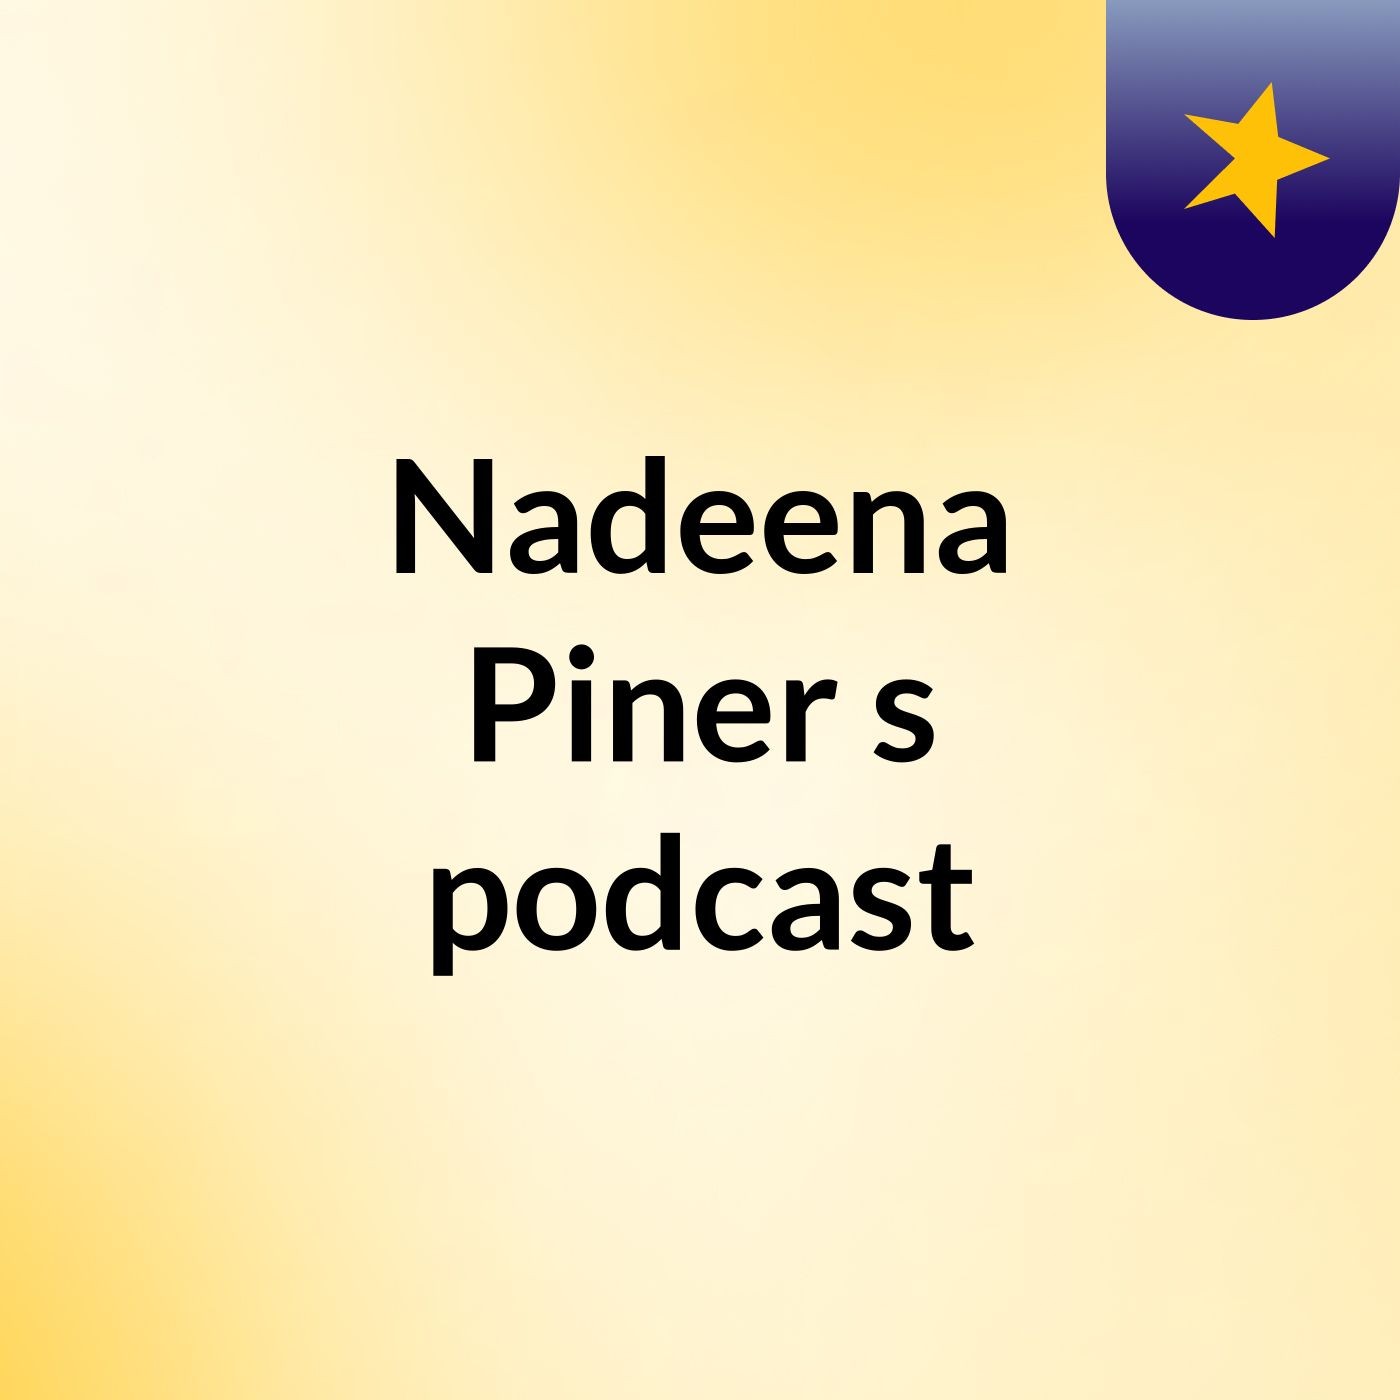 Nadeena Piner's podcast